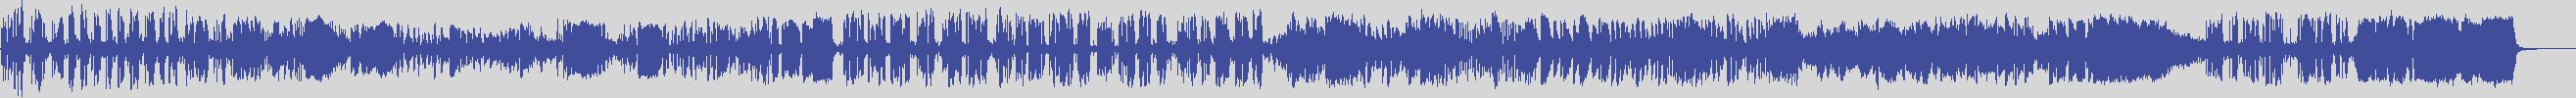 digiphonic_records [DPR010] Judy Garland, Patsy Kelly - Texas Tornado, the Balboa [Original Mix] audio wave form